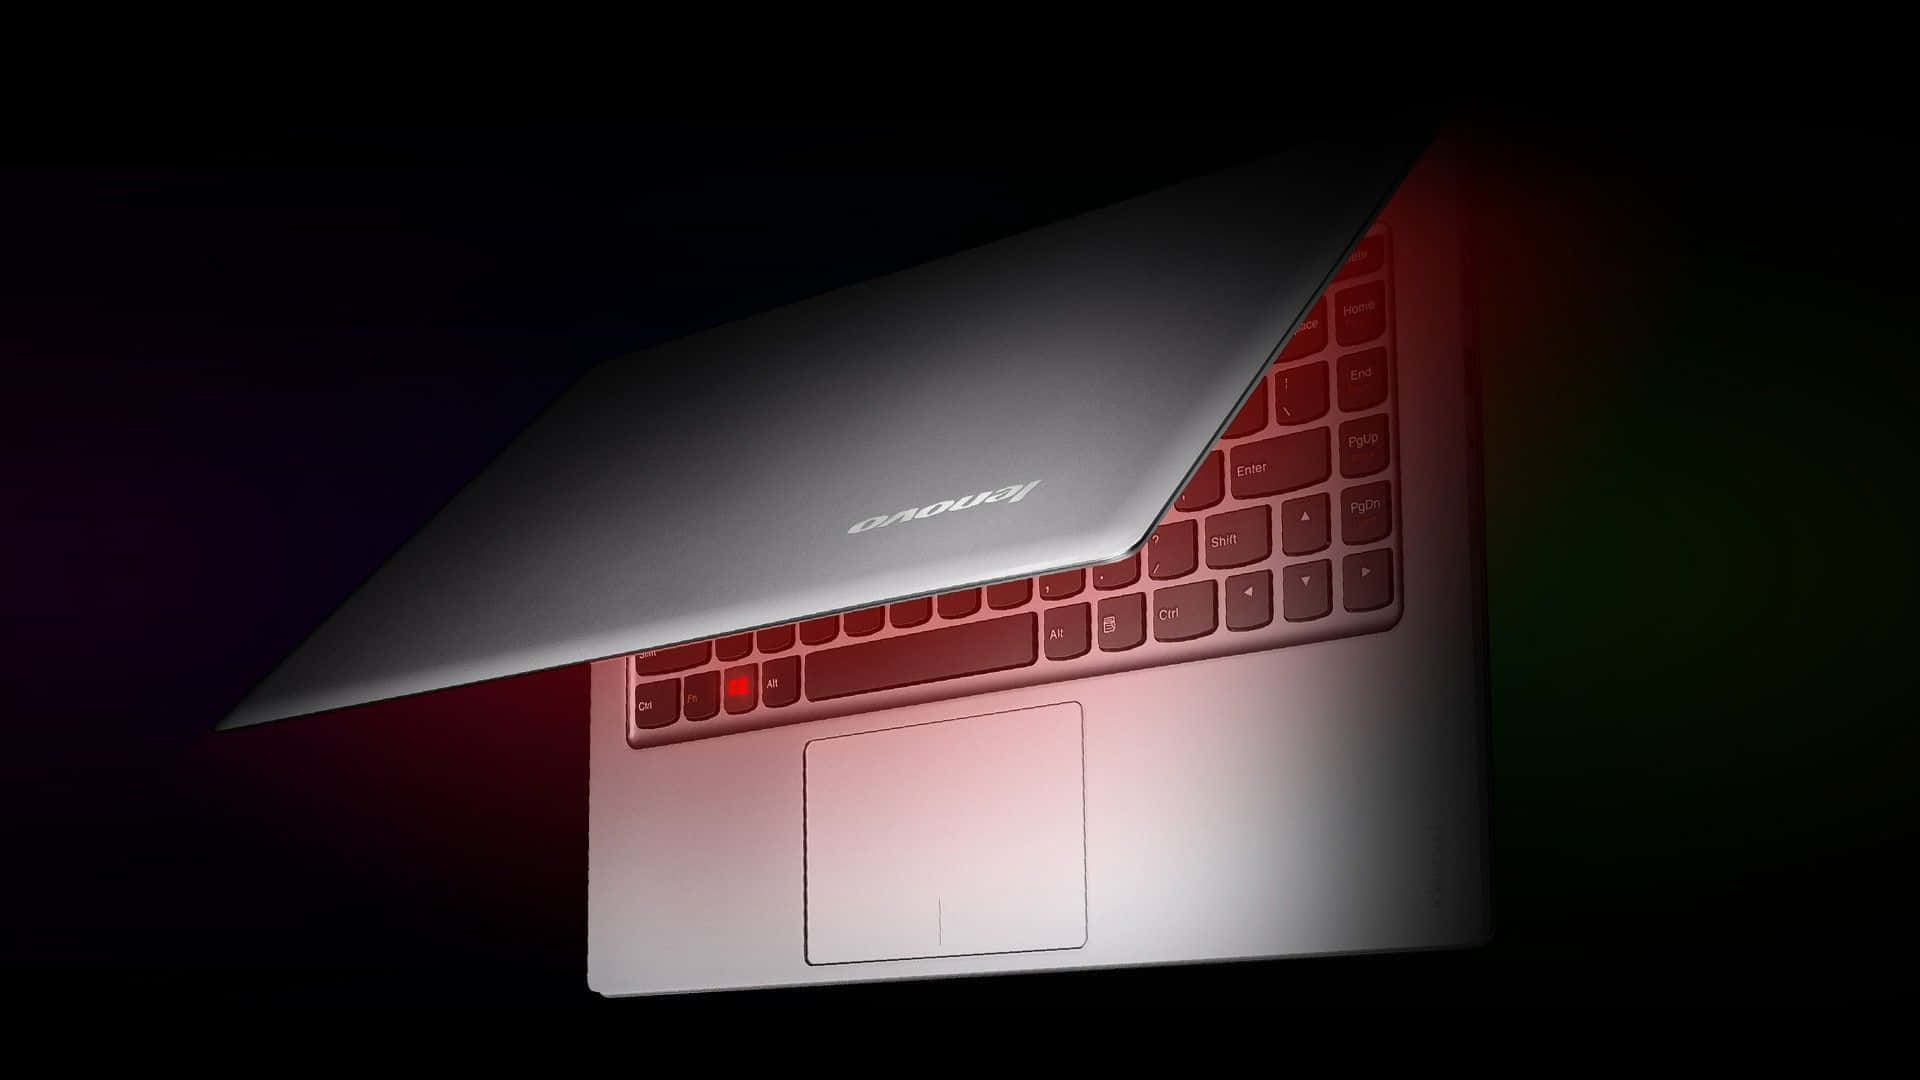 Caption: Lenovo Laptop Undergoing Efficiency Test